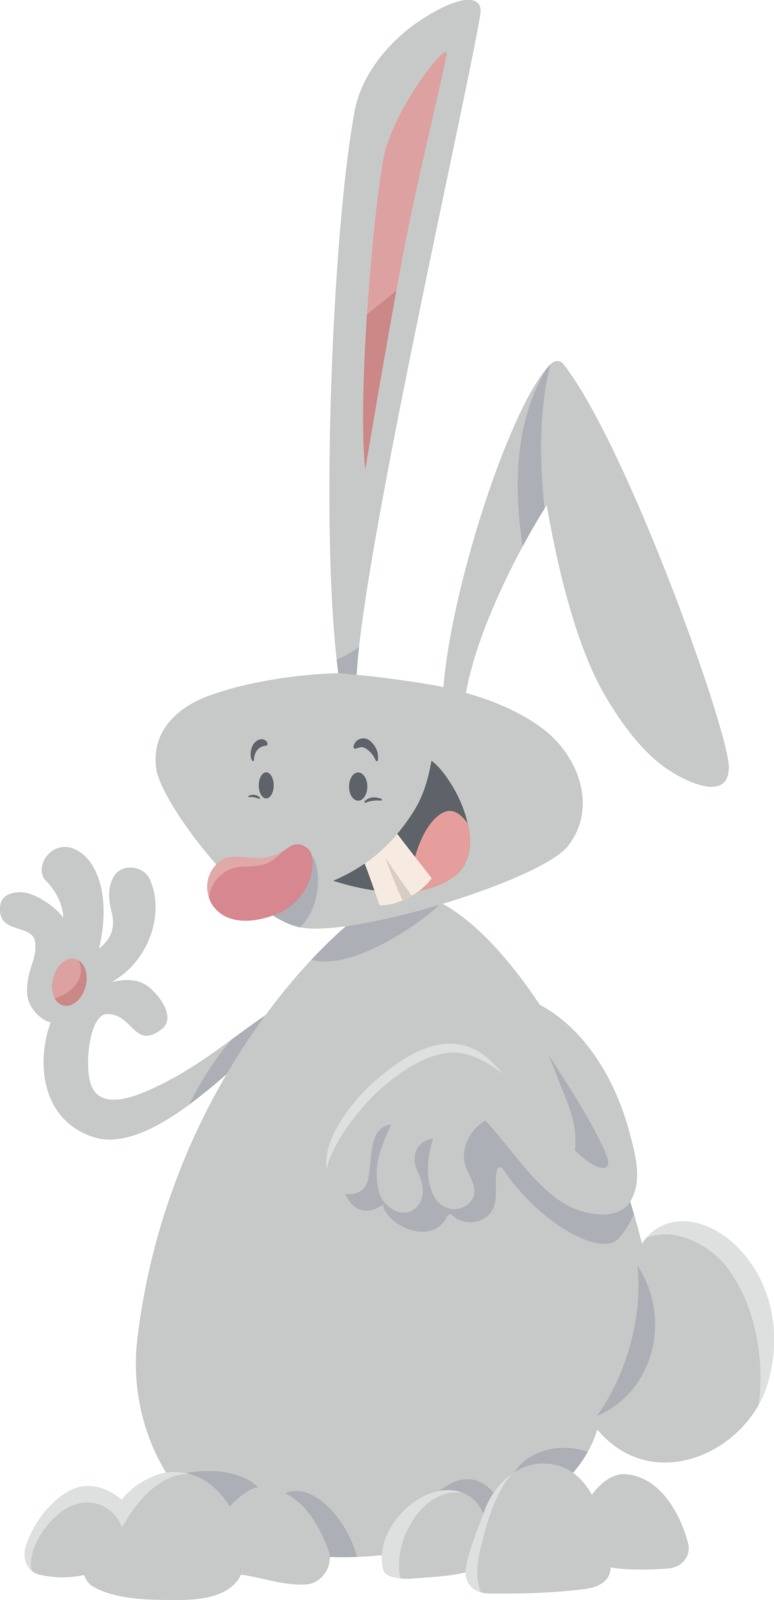 Cartoon Illustration of Happy Rabbit or Bunny Animal Character